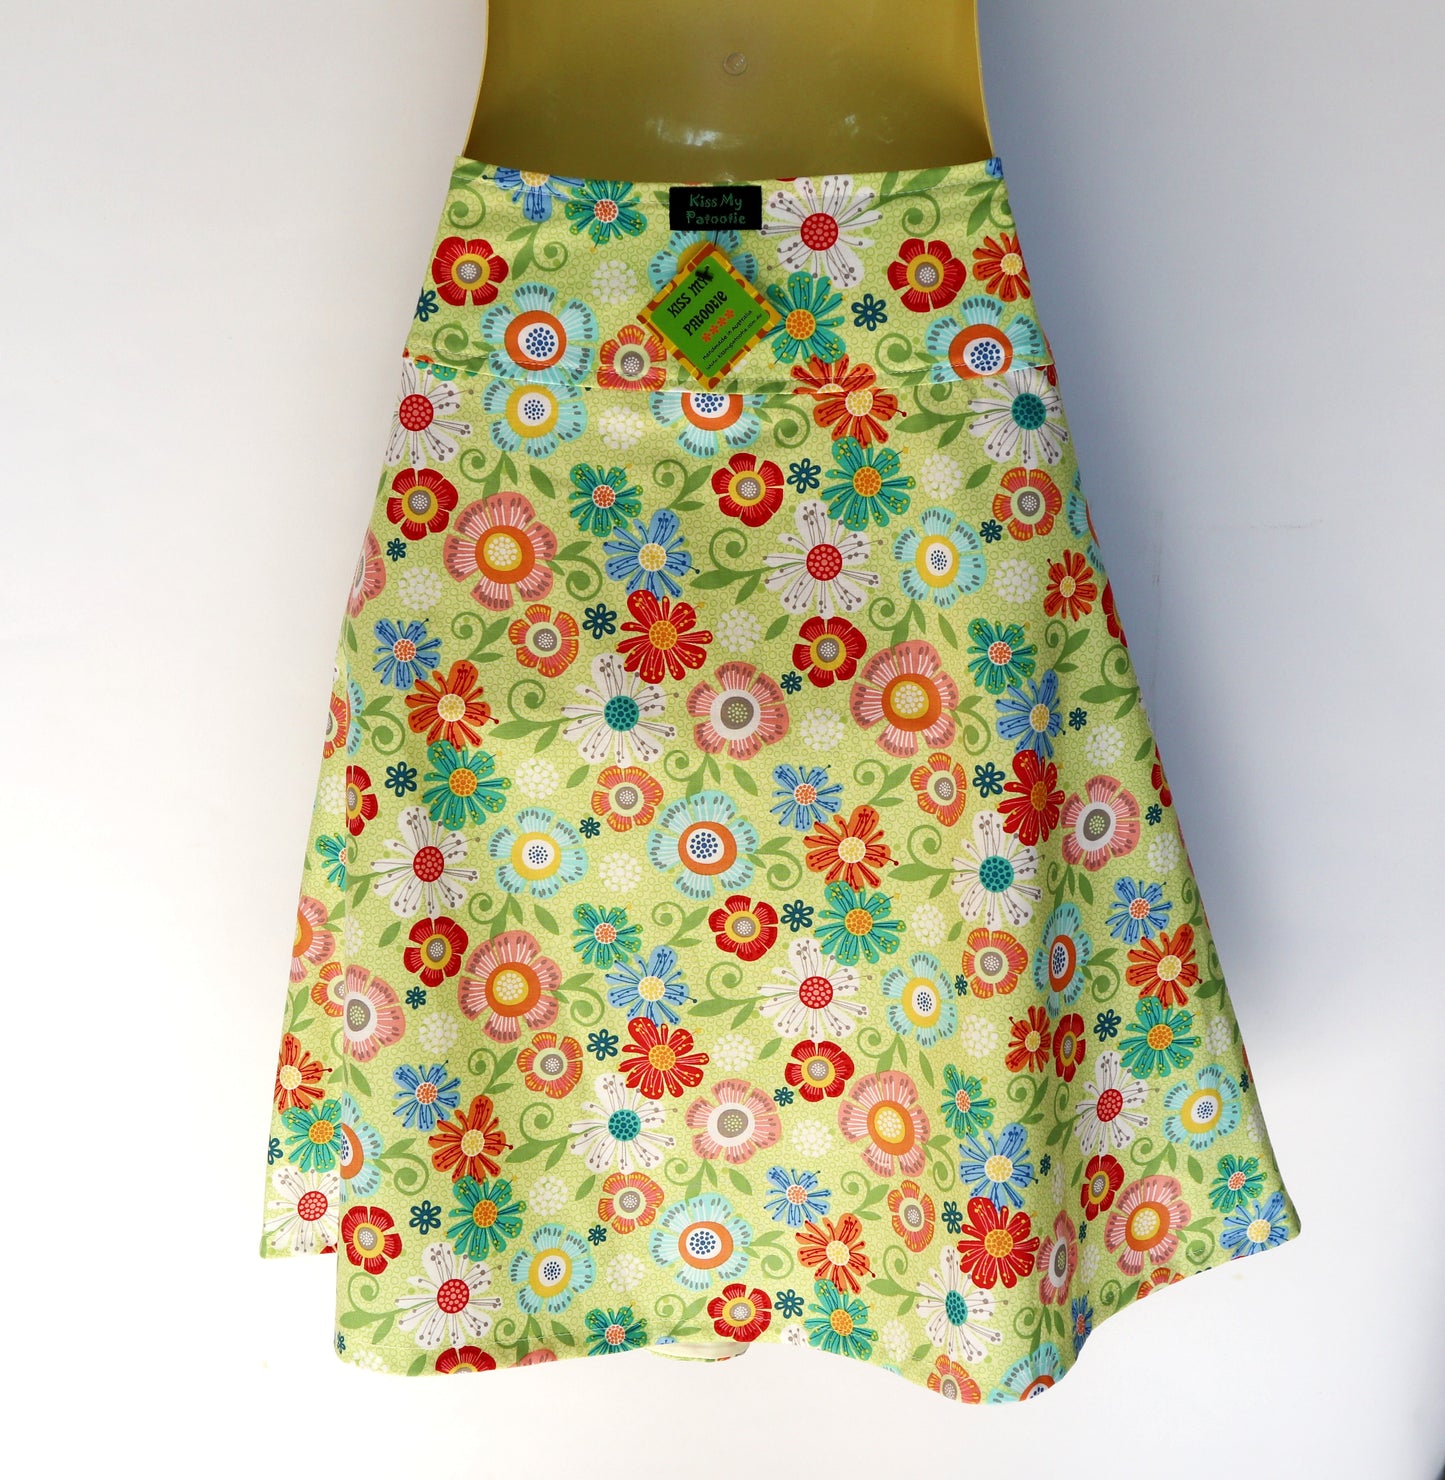 Wrap Around Skirt - green floral - Sizes 8 to 26